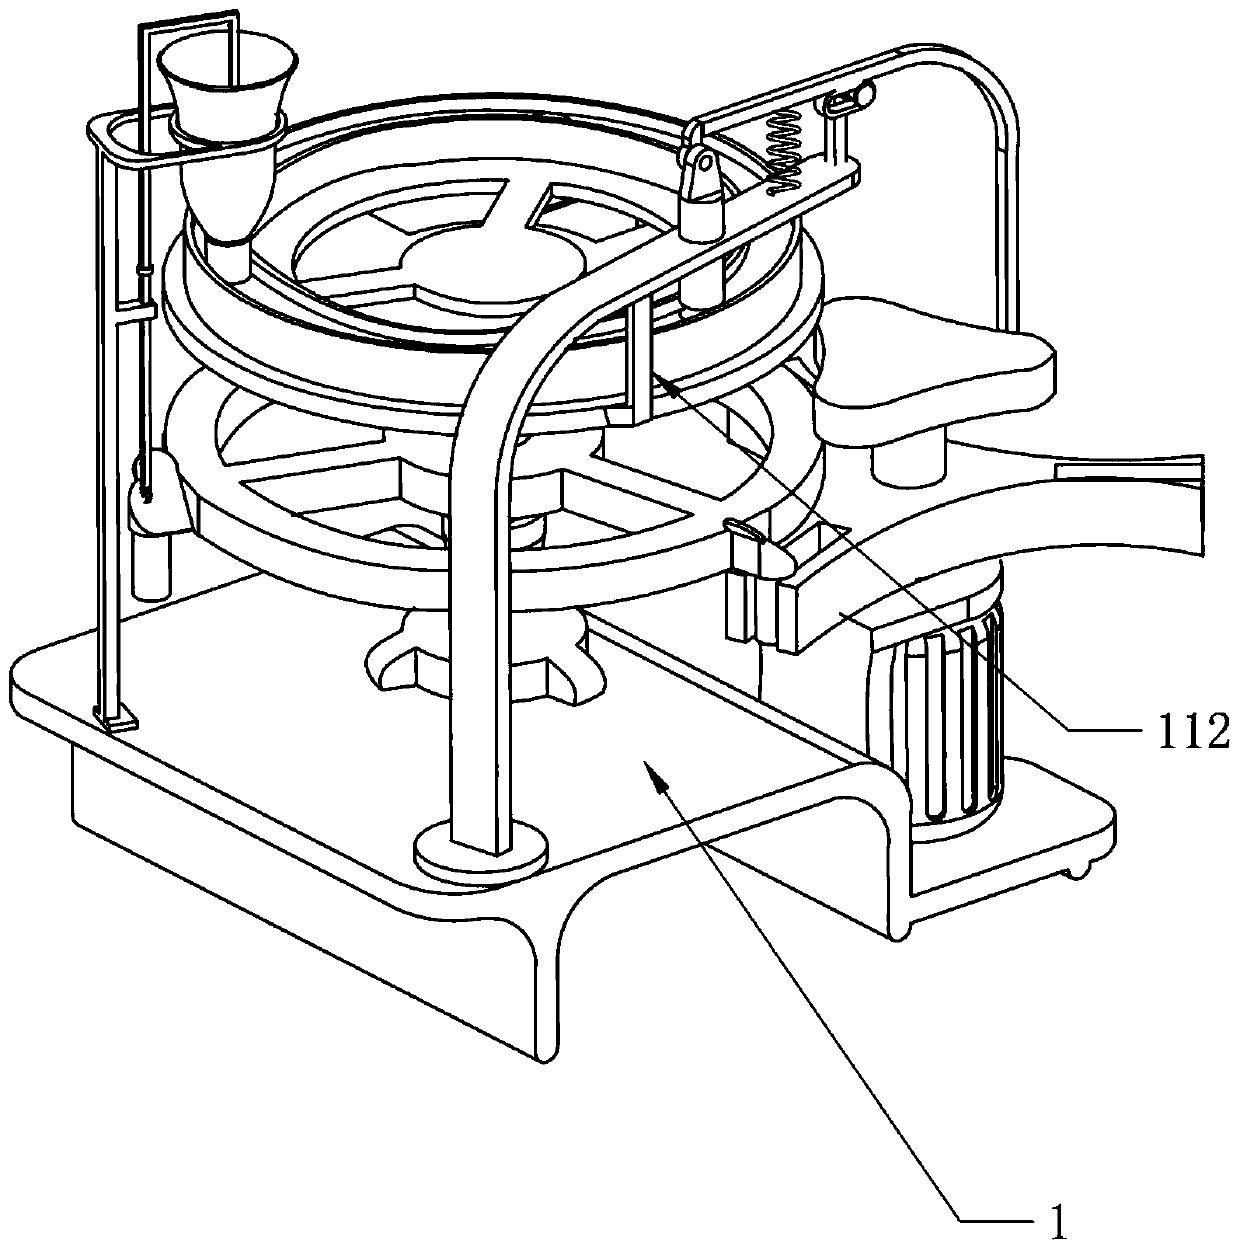 Automatic rotating medicine tablet press